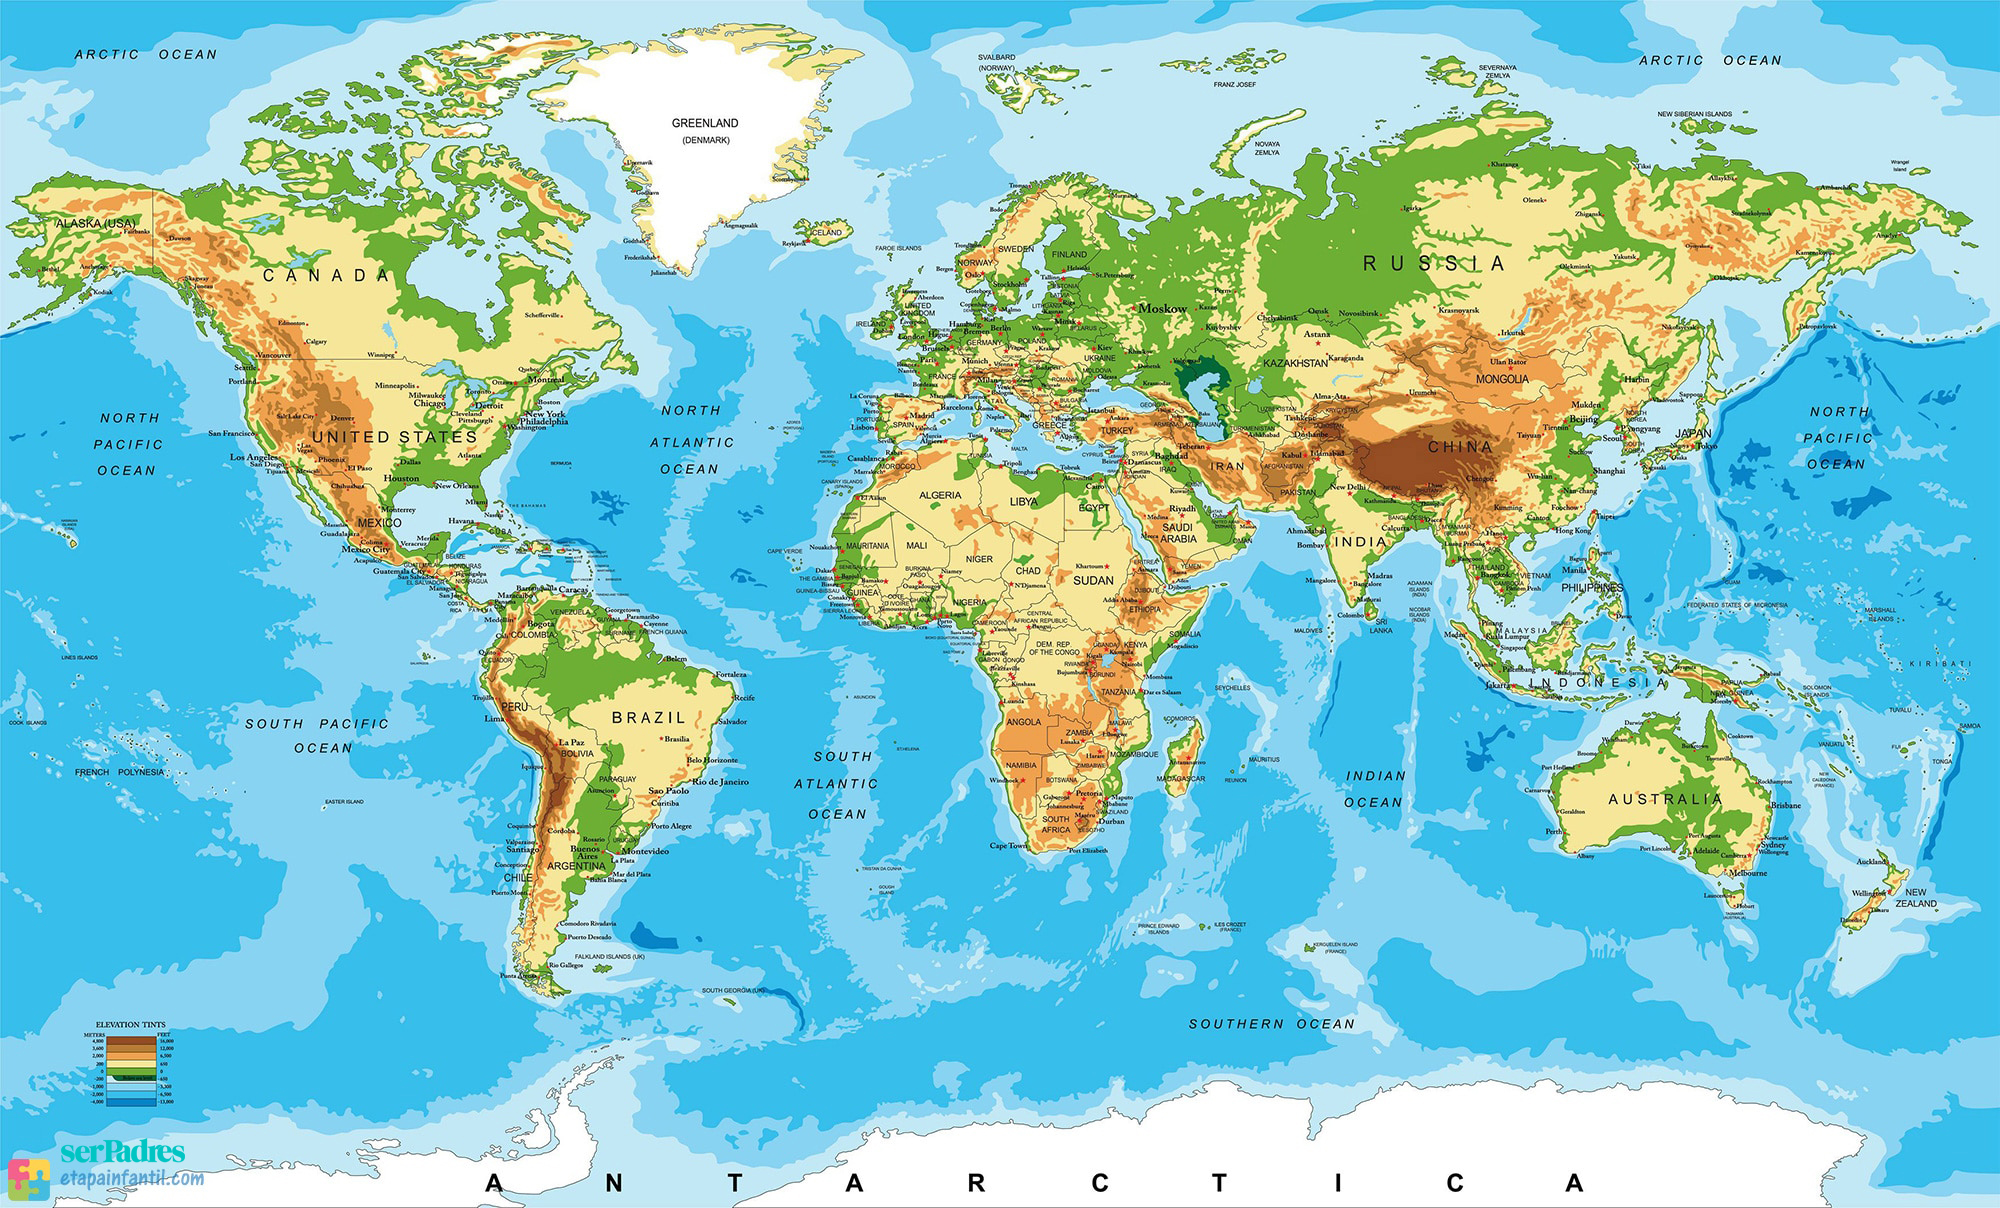 MAPAMUNDI, Mapas del mundo: Relieve, Países, Continentes…